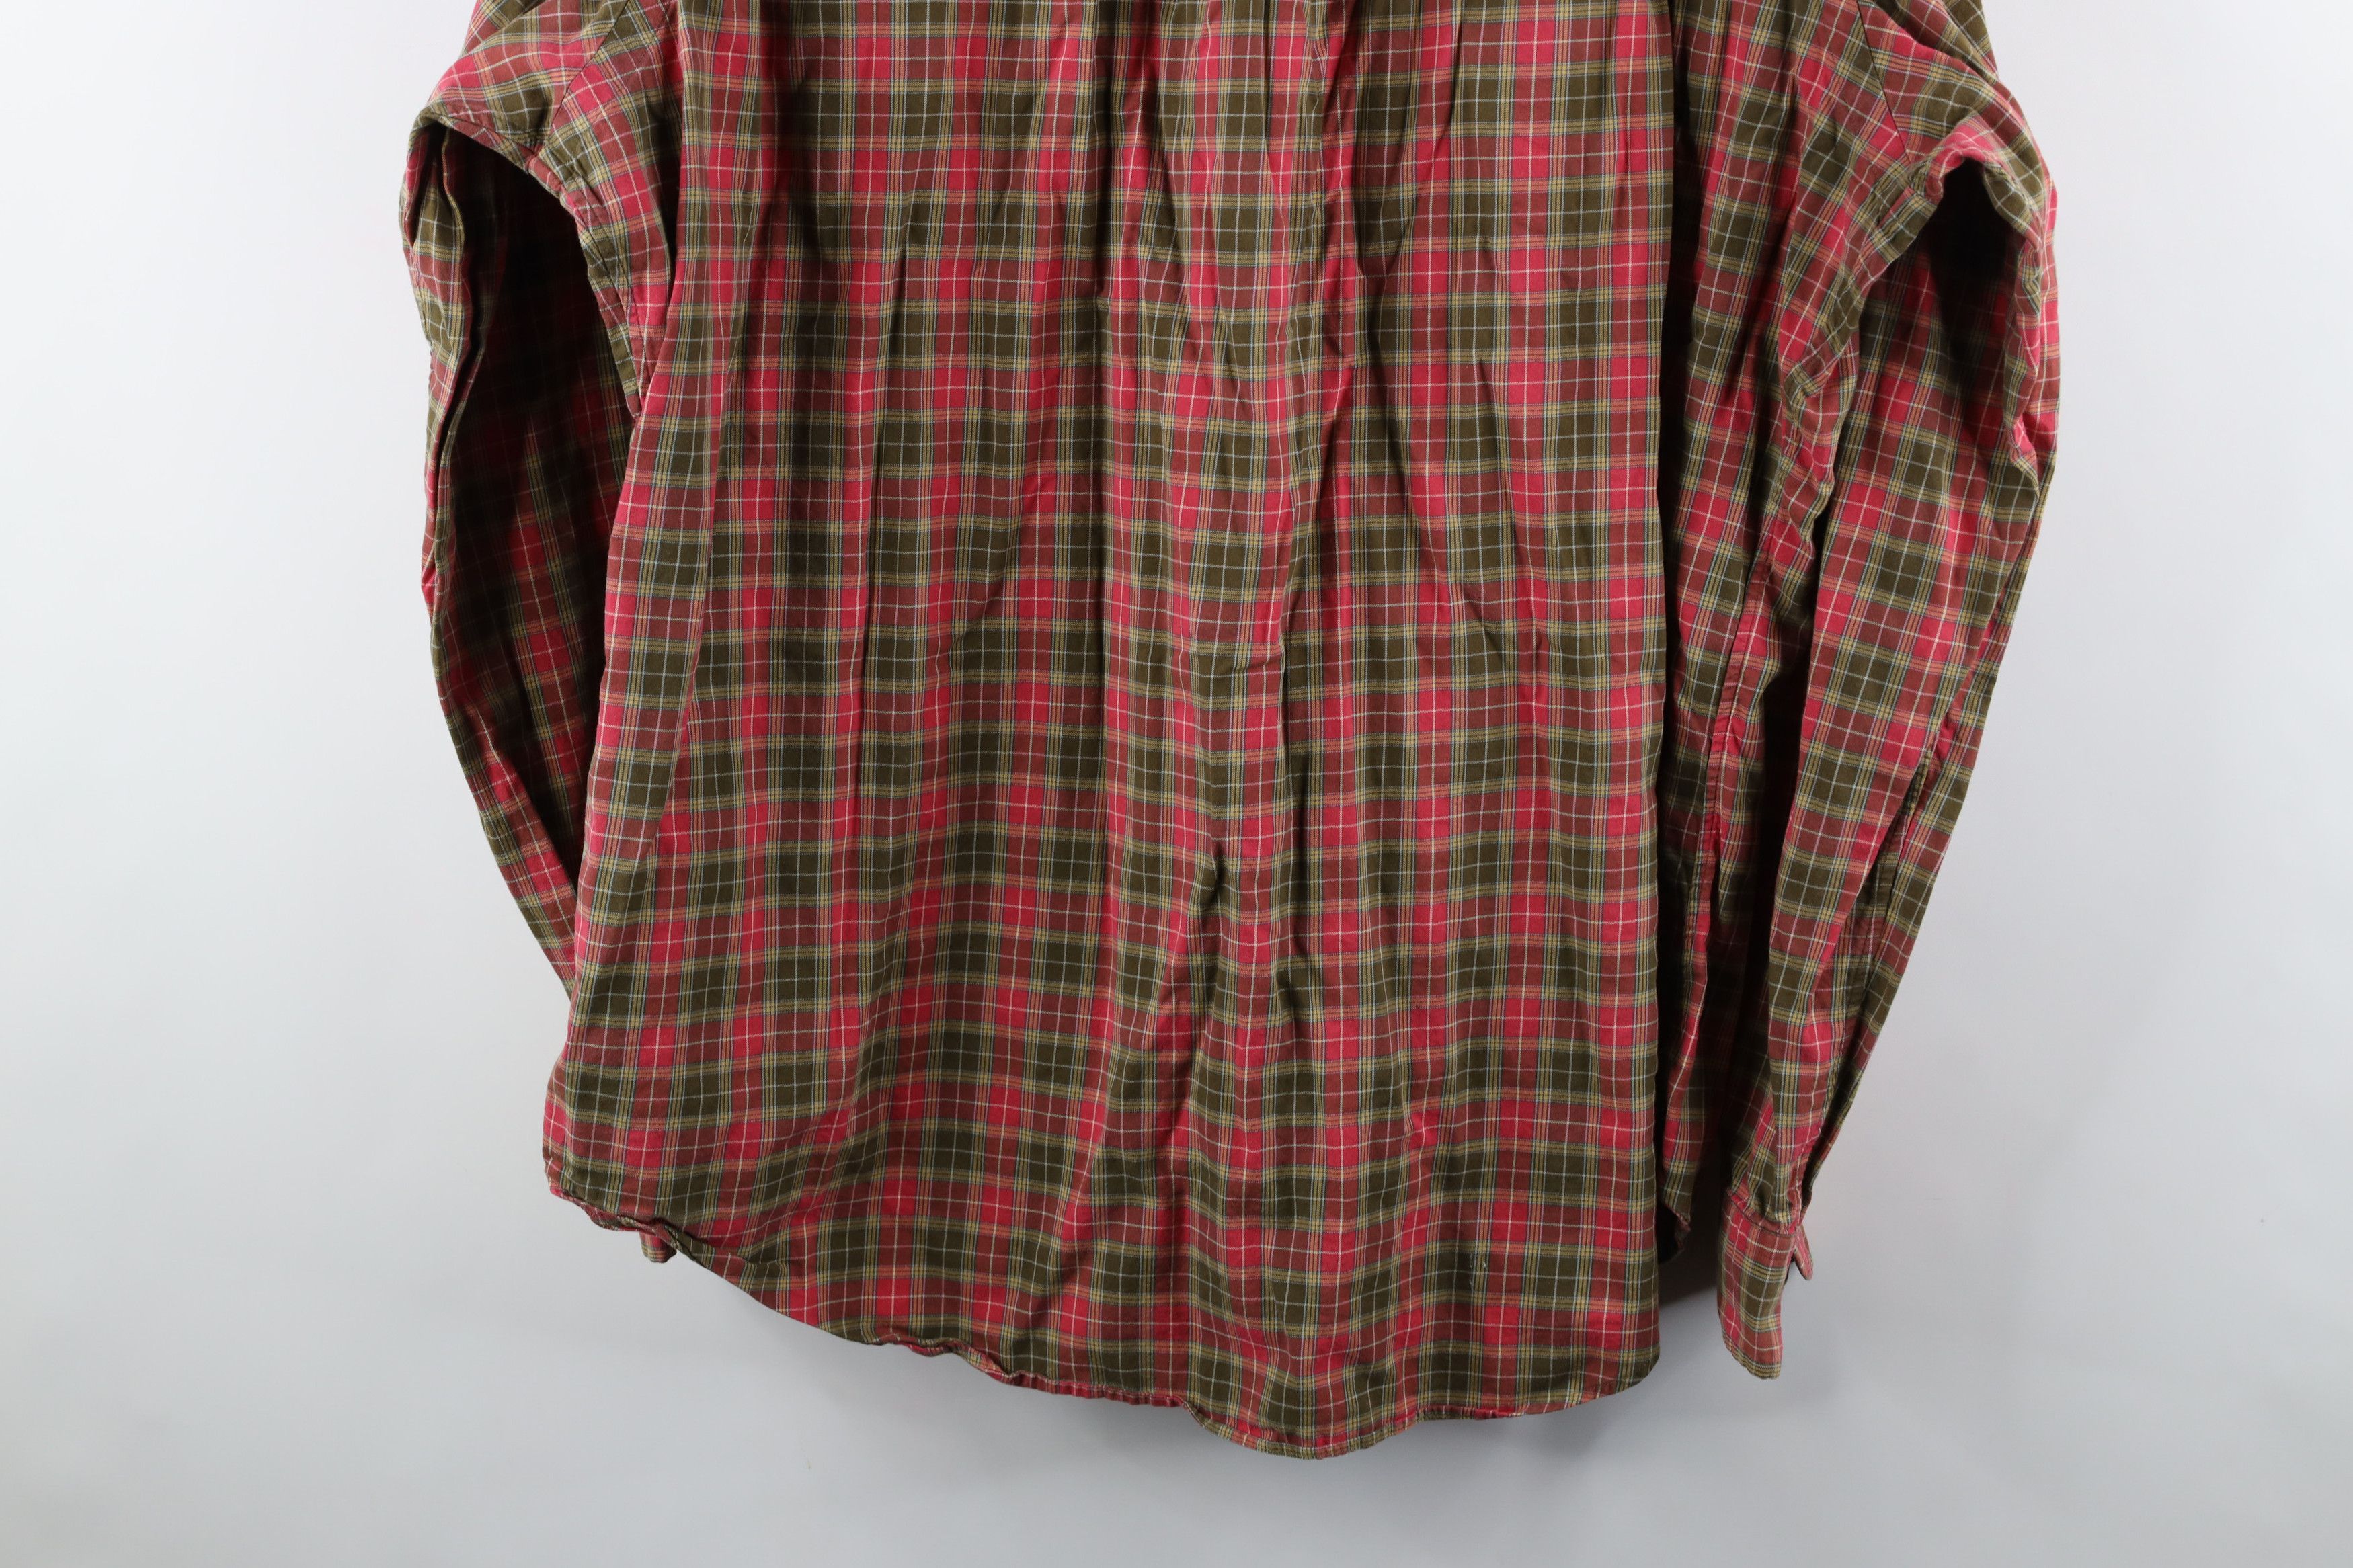 Ralph Lauren Vintage 90s Ralph Lauren Faded Collared Button Down Shirt Size US L / EU 52-54 / 3 - 8 Preview